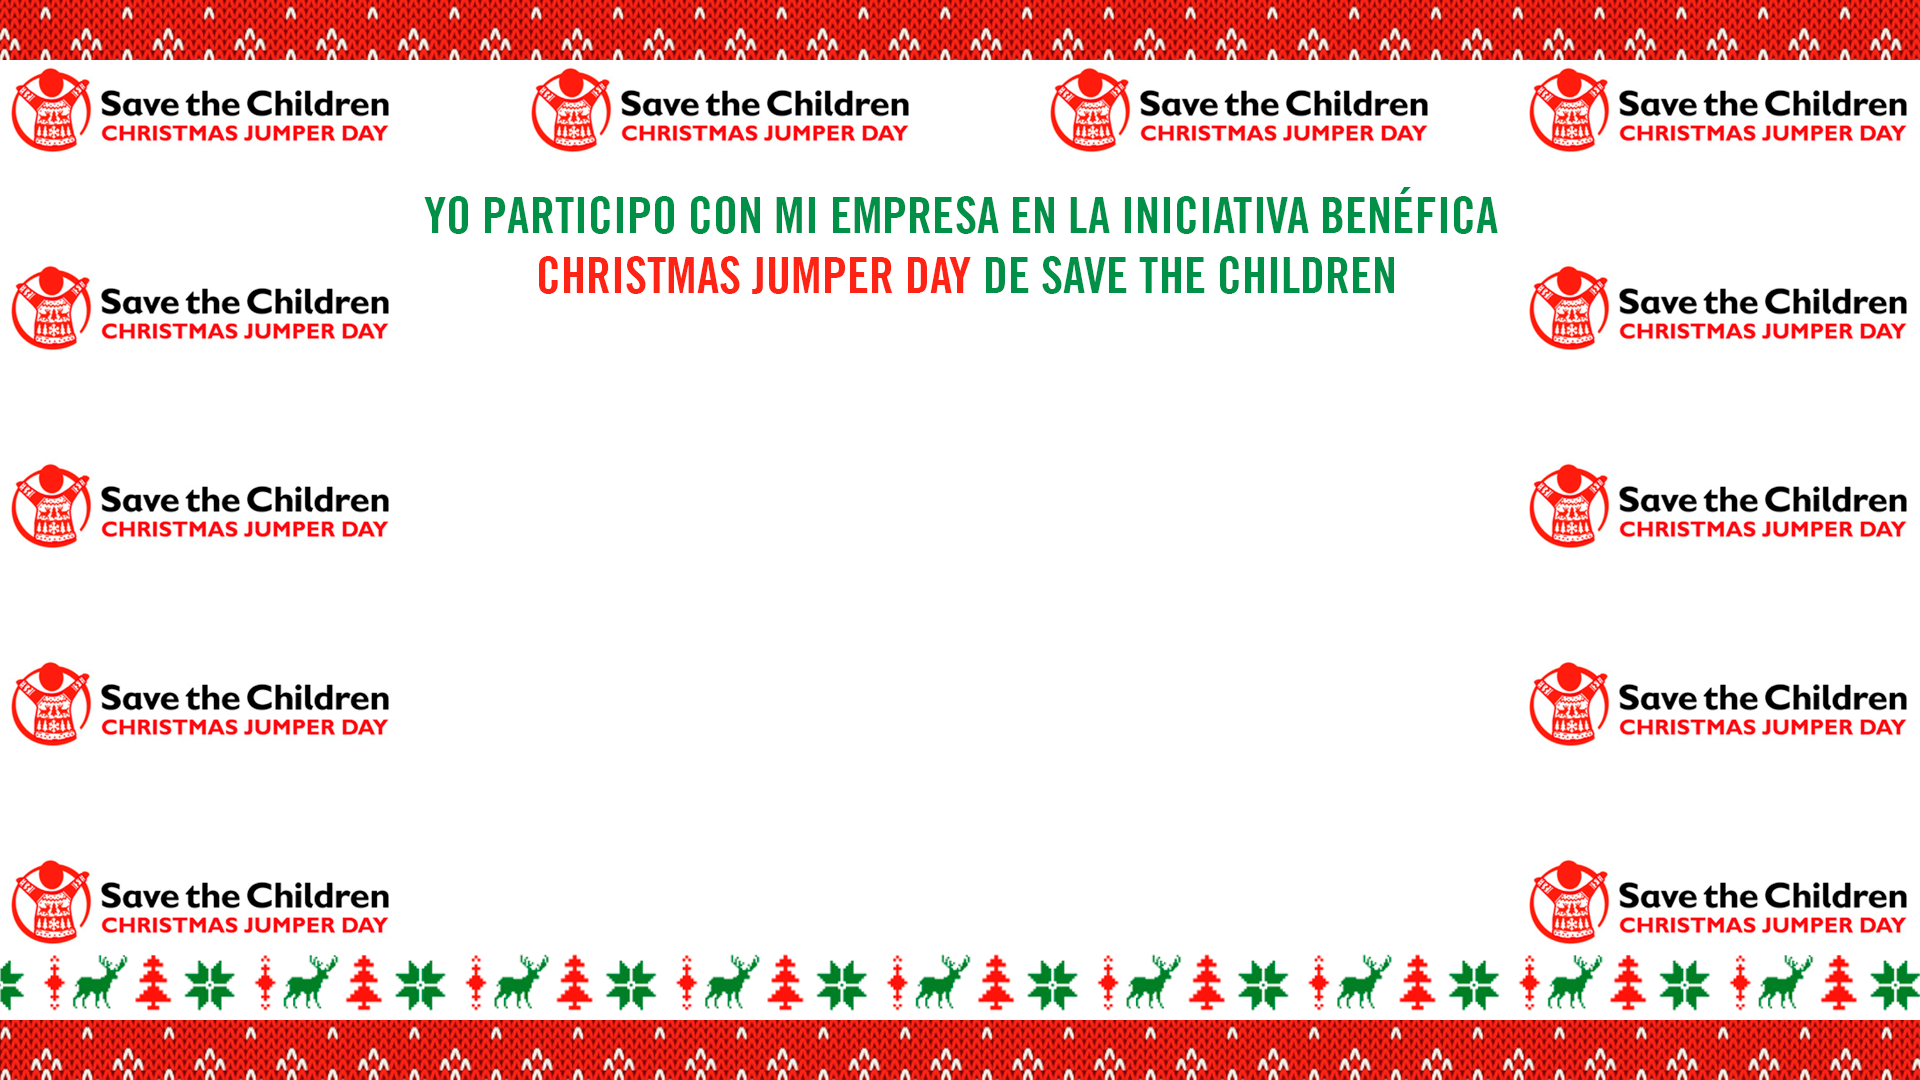 Fondo CJD 2020 para teams - Save the Children